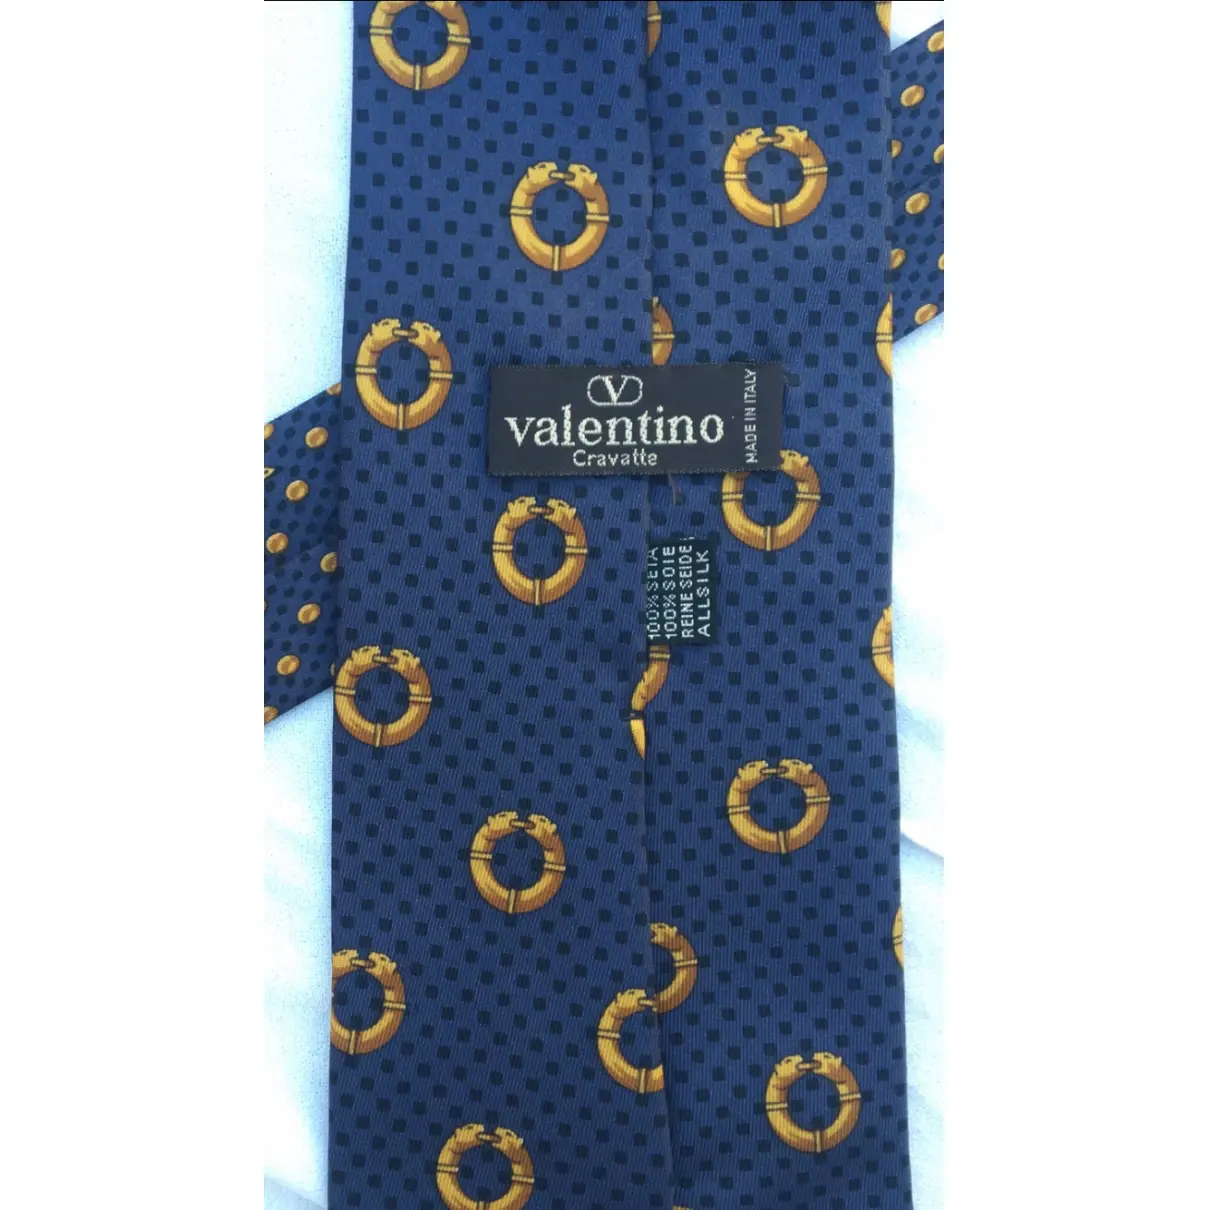 Valentino Garavani Silk tie for sale - Vintage